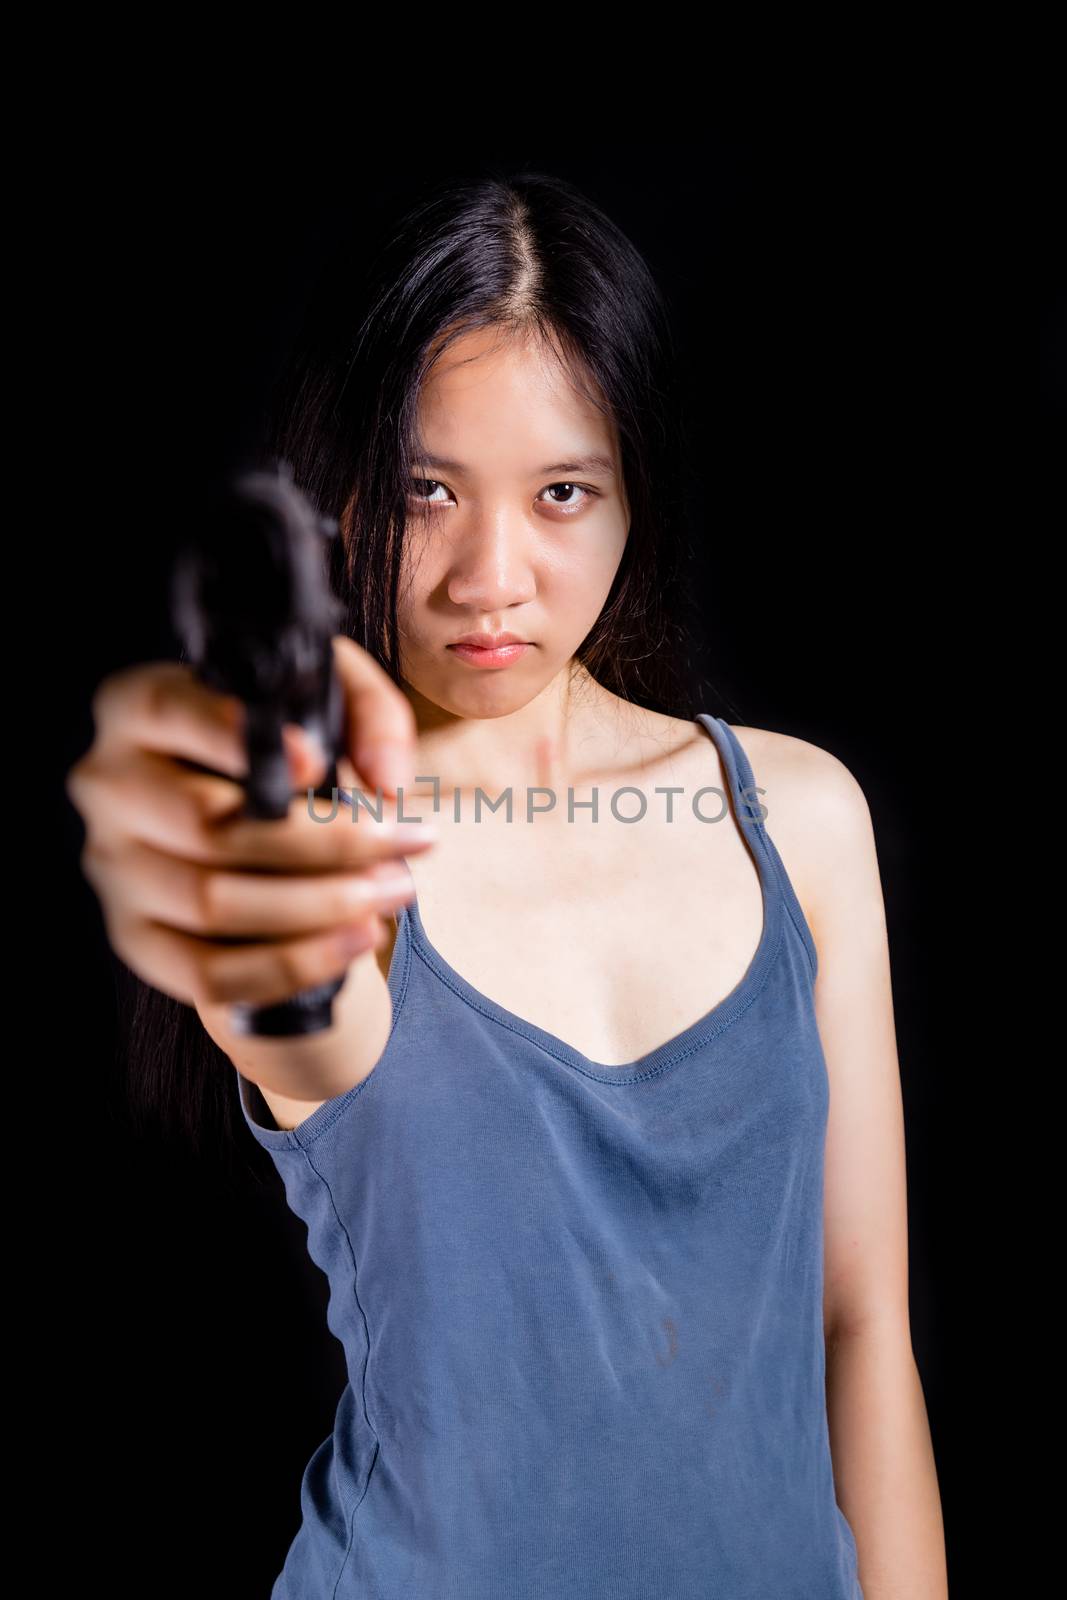 Teenage Asian American girl pointing handgun